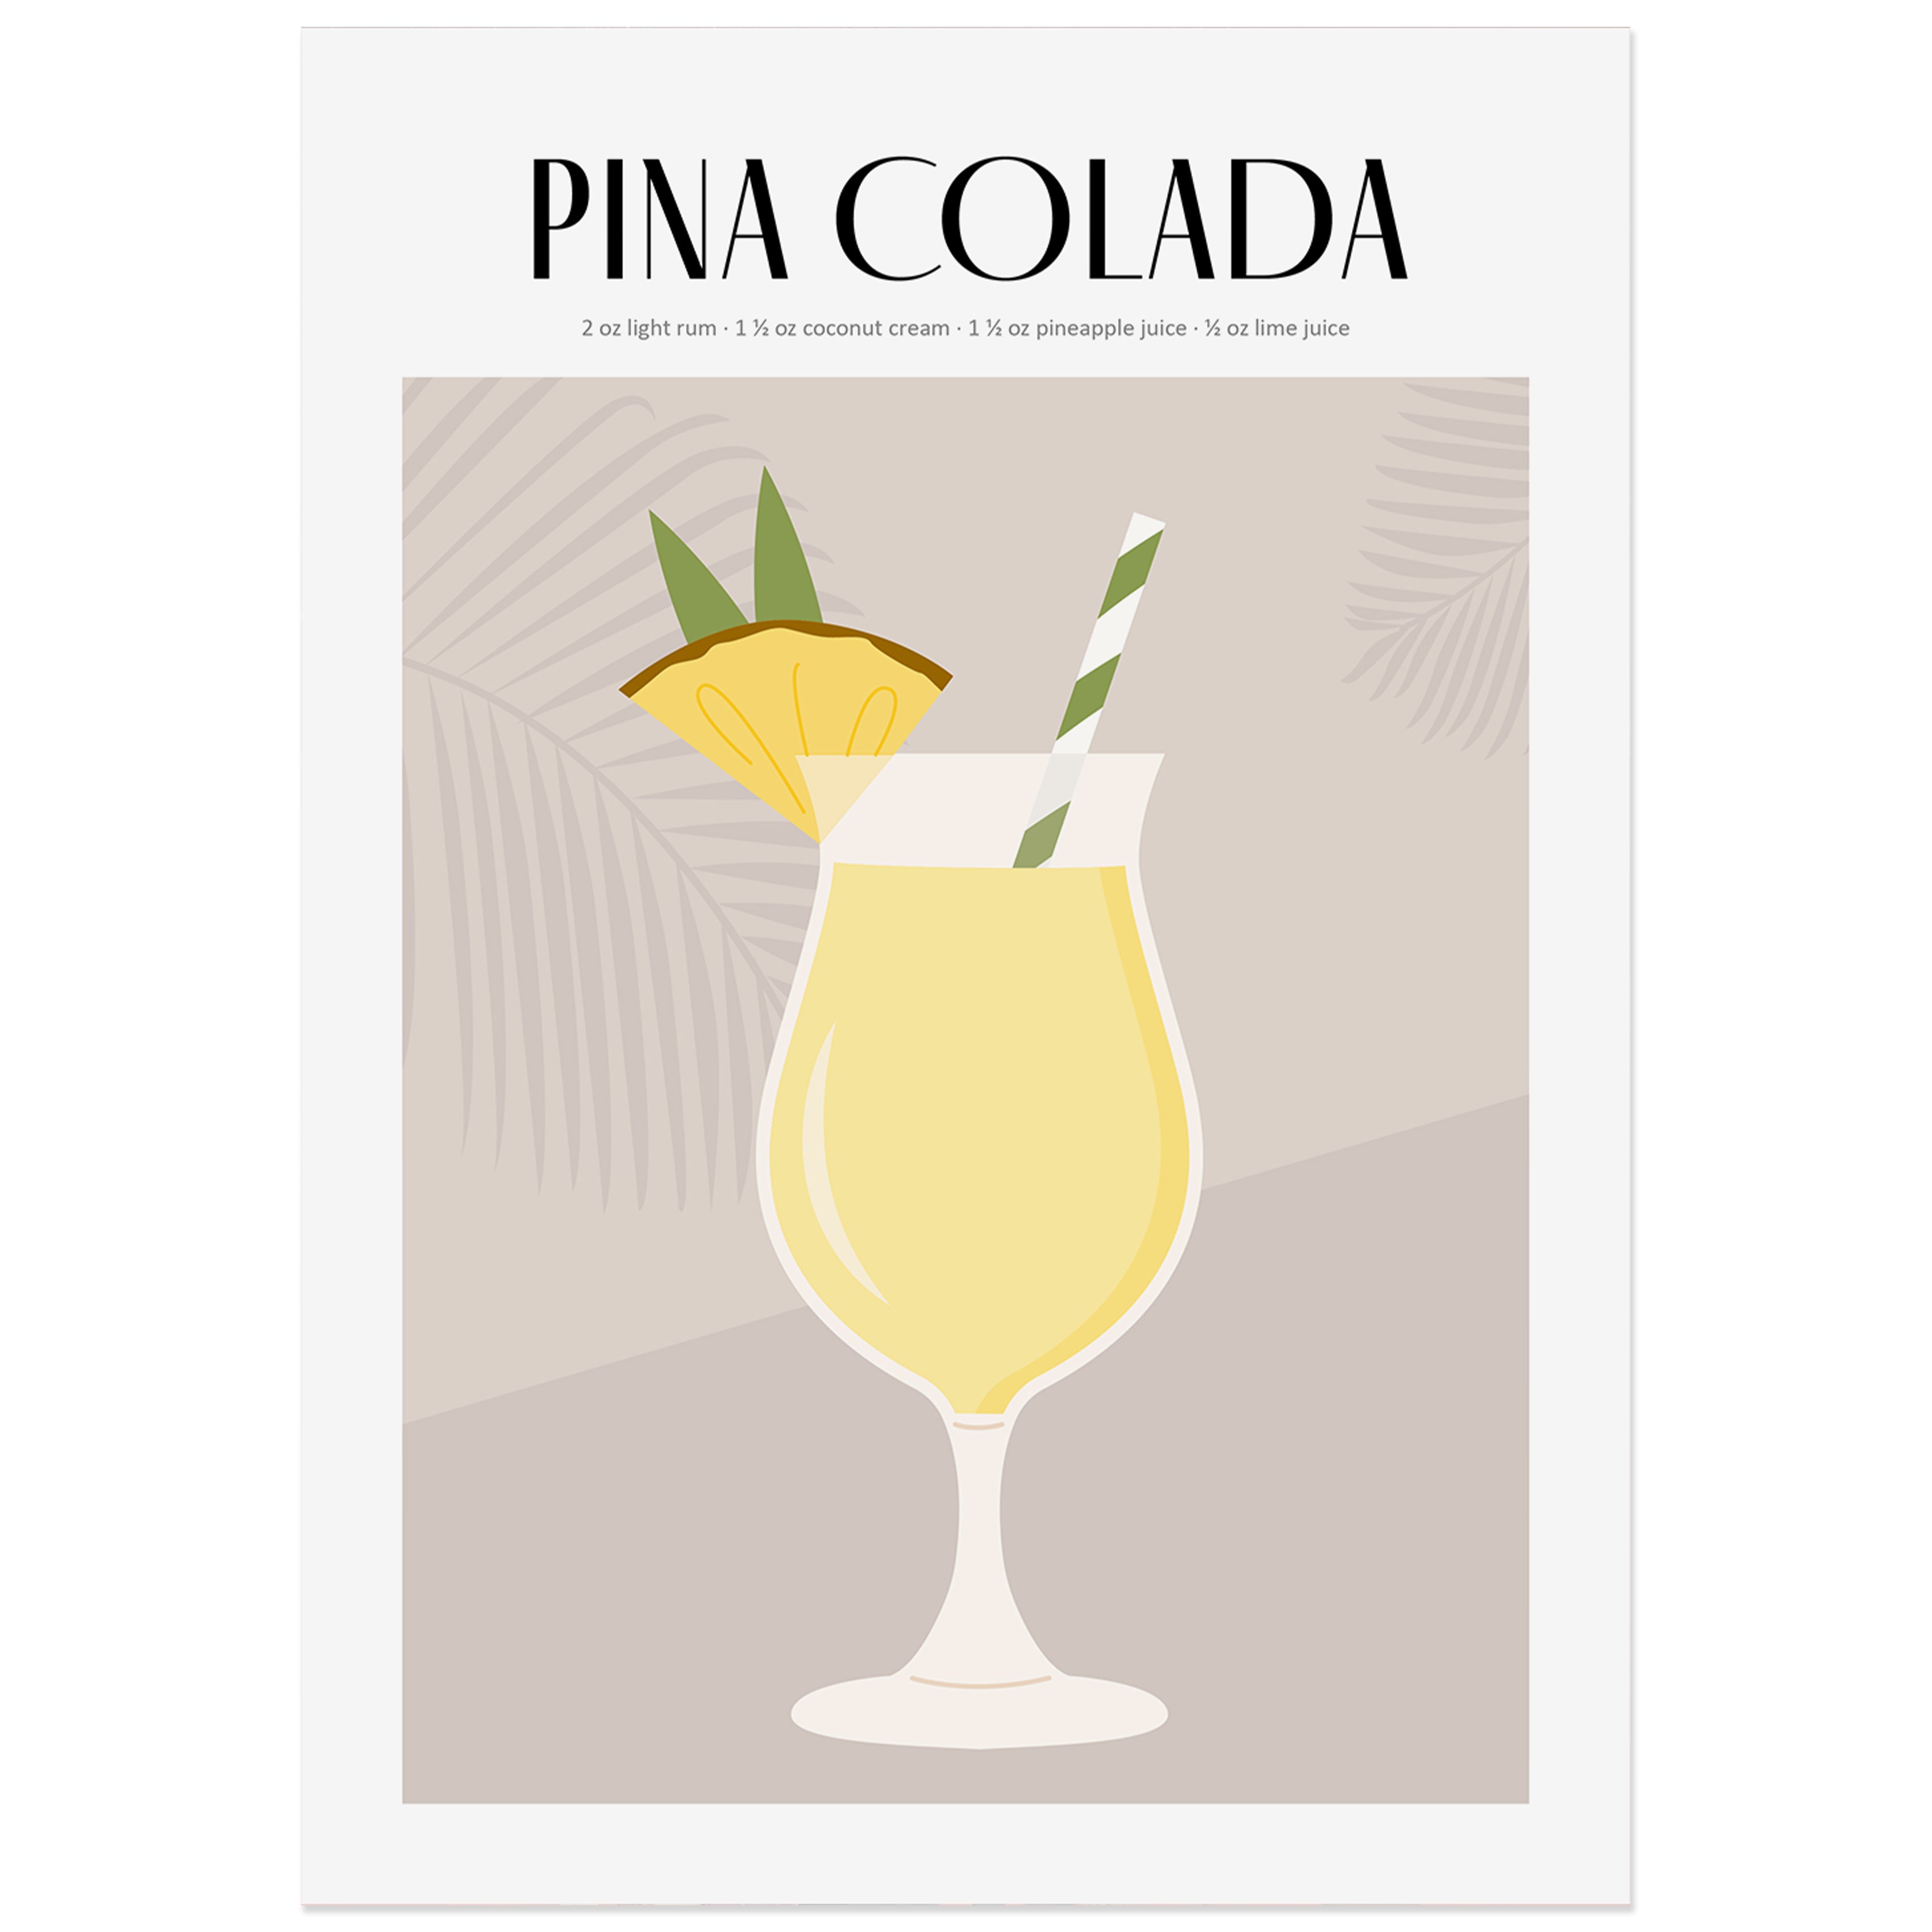 Pina Colada Poster